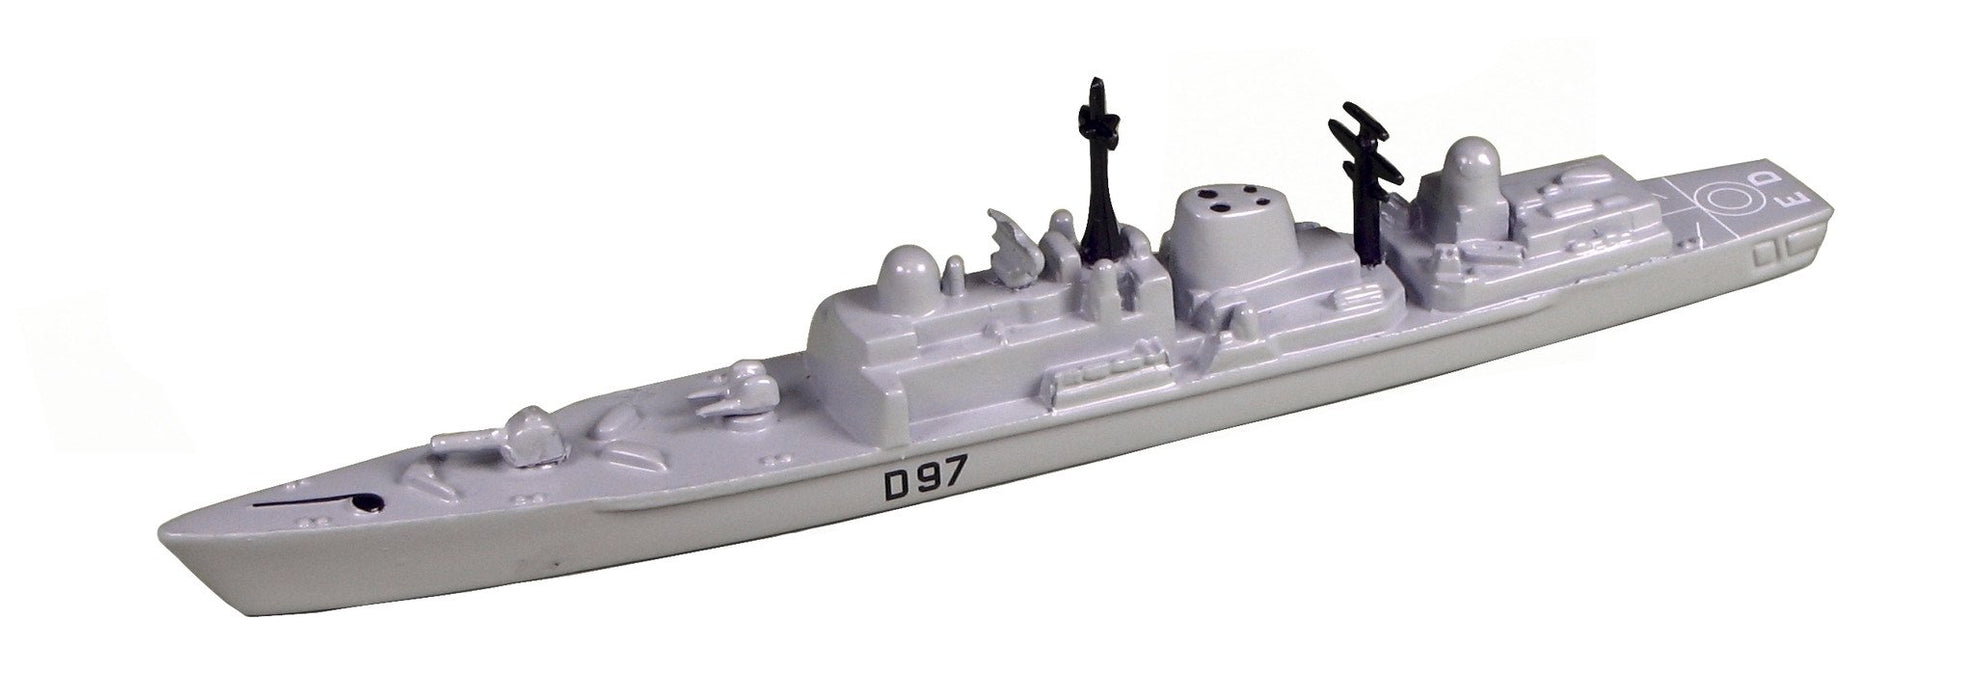 TRIANG TR1P750D97 HMS Edinburgh D97 Triang 1:1200 Scale Model Navy Theme